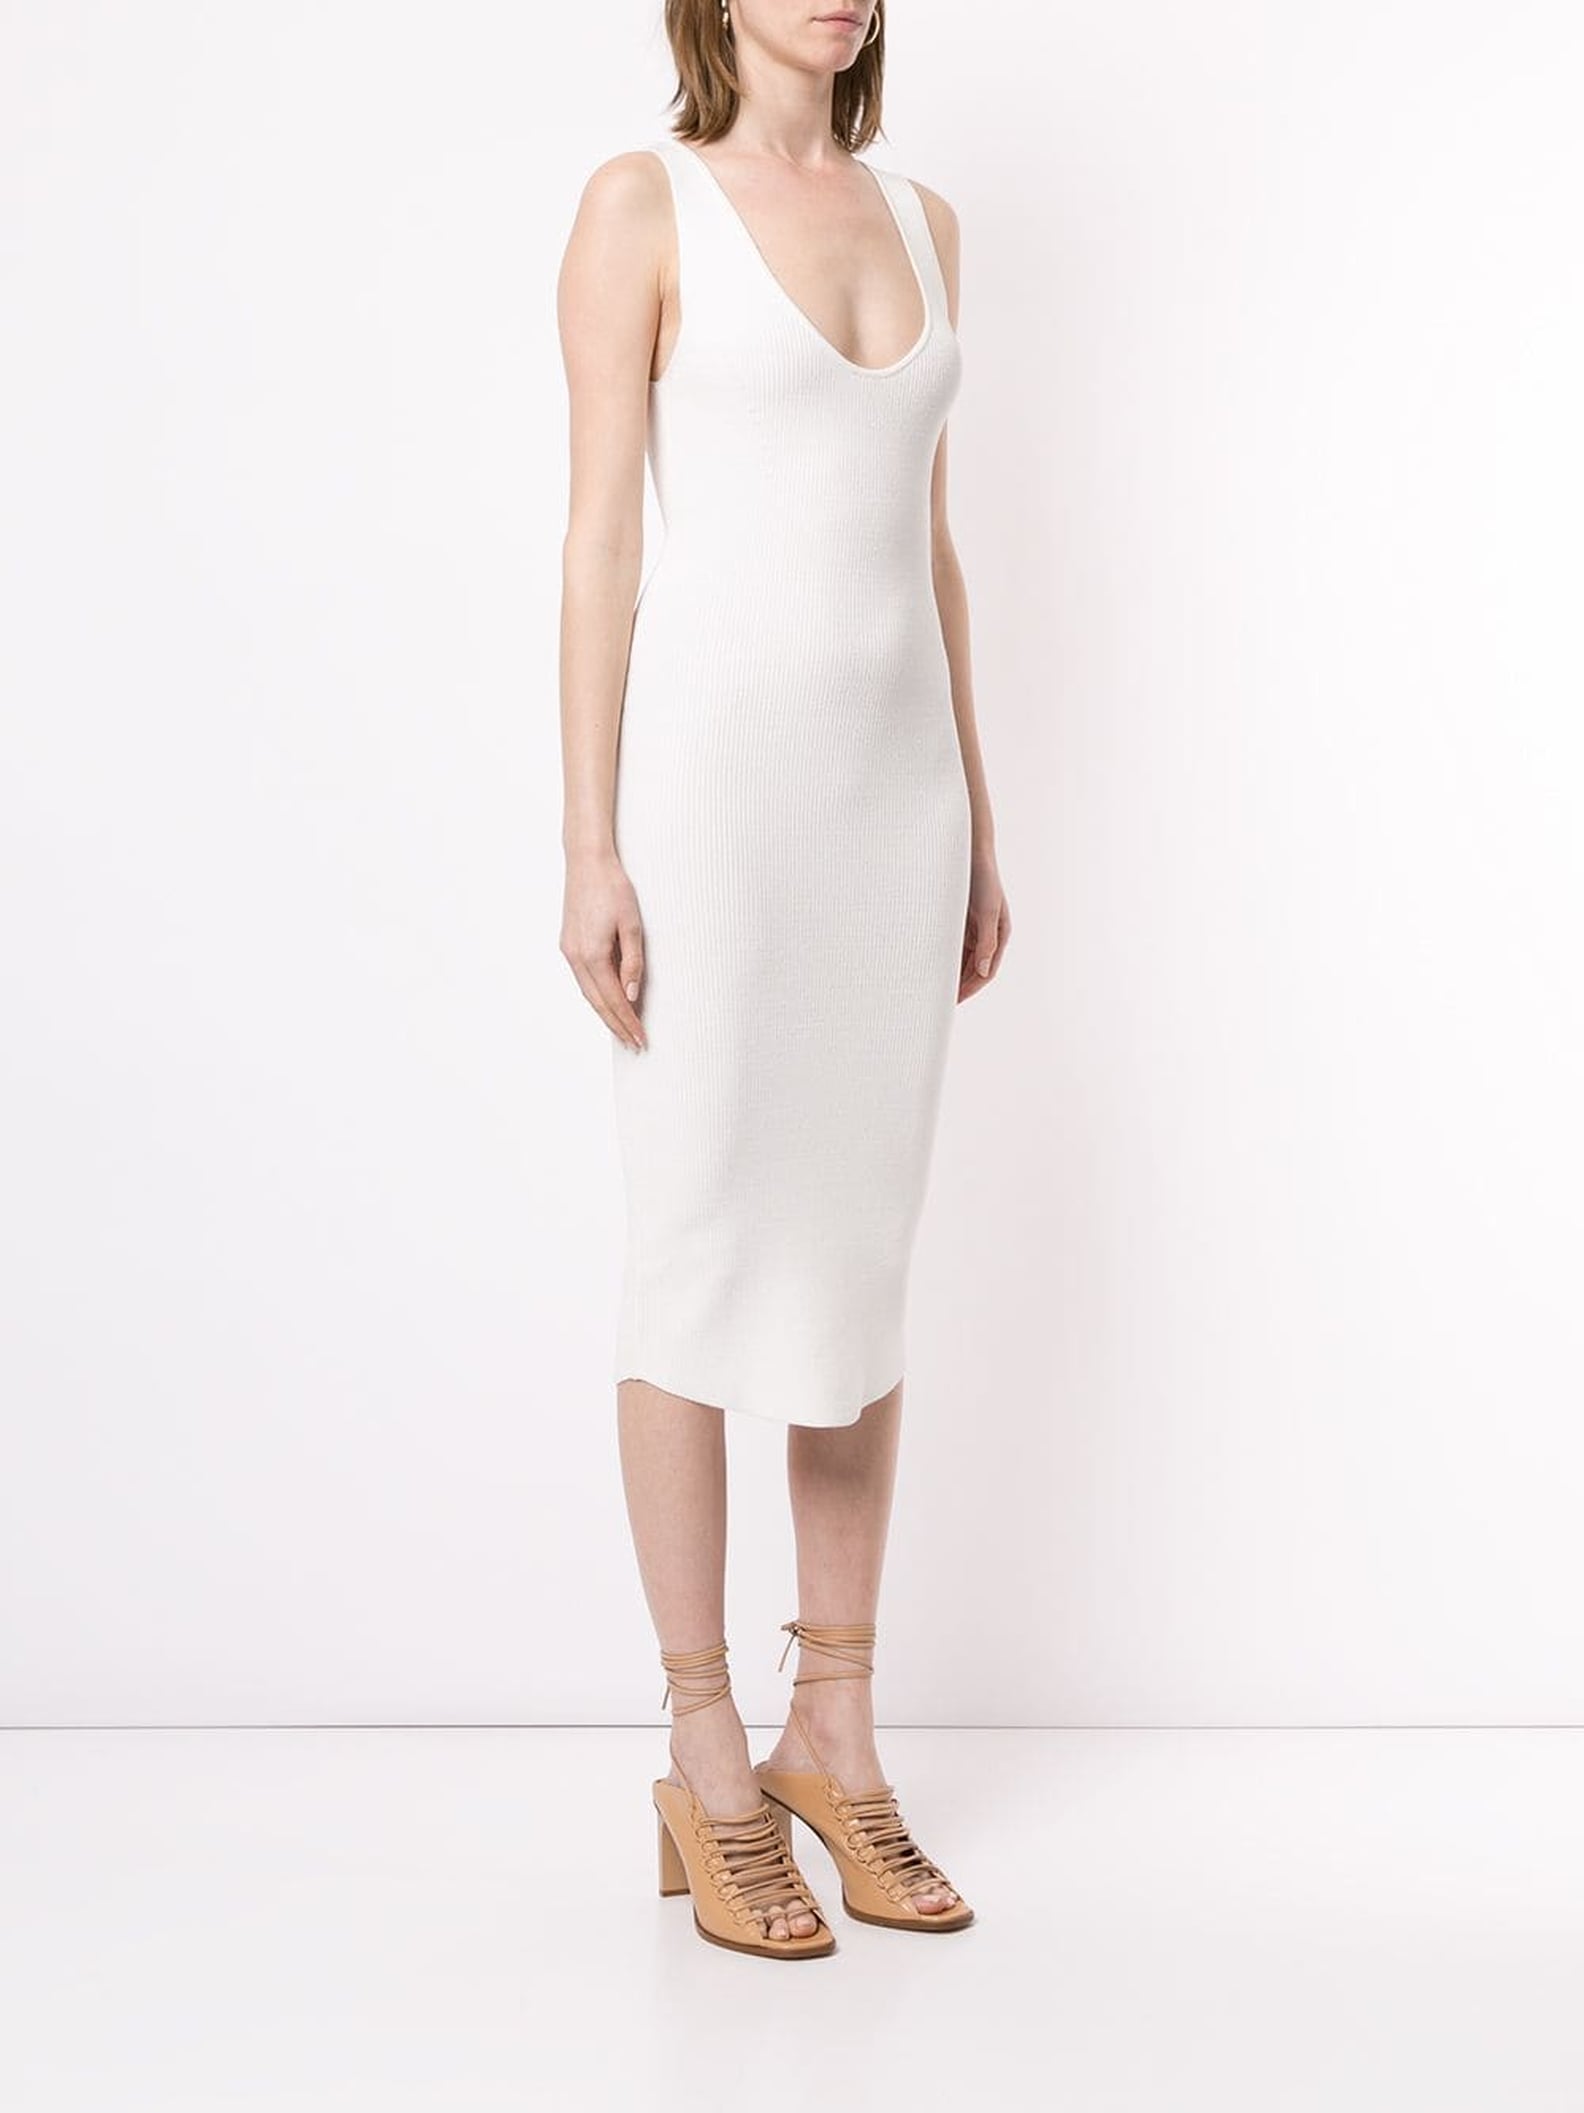 Kim Kardashian Stole This White Dress From Kylie Jenner | POPSUGAR Fashion